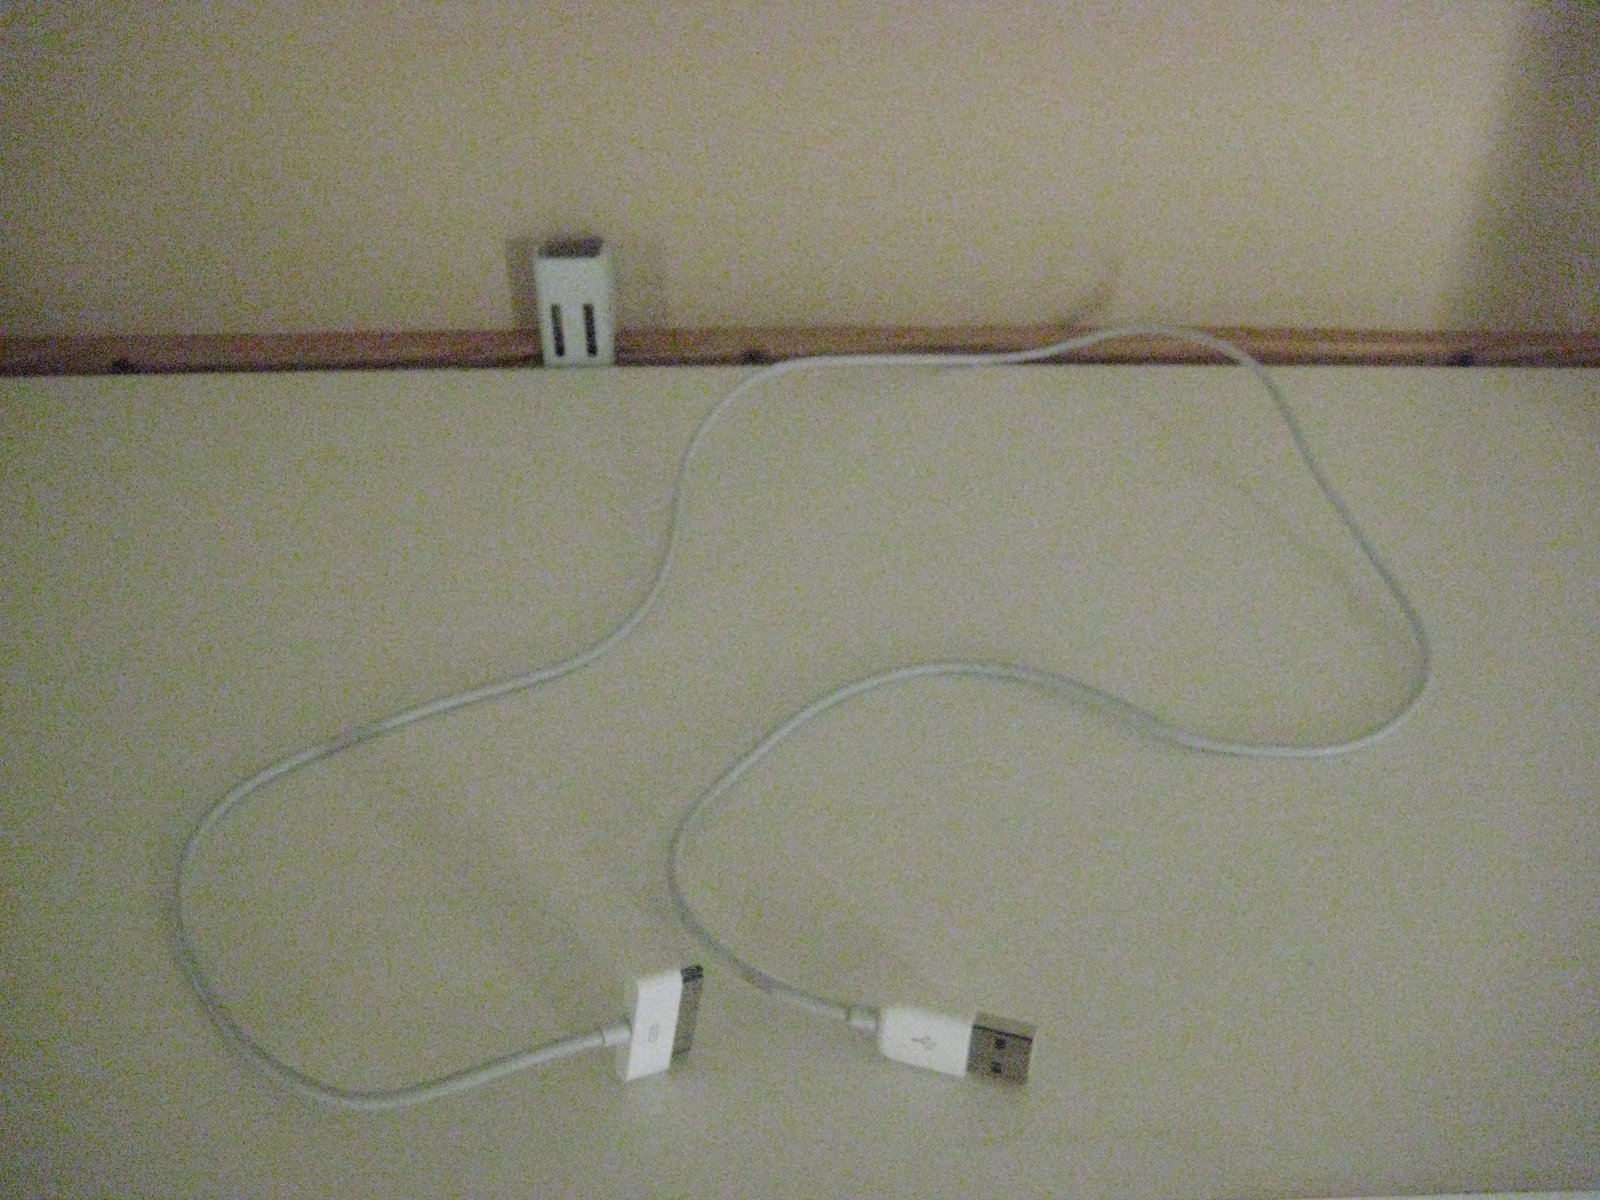 Ipod cord